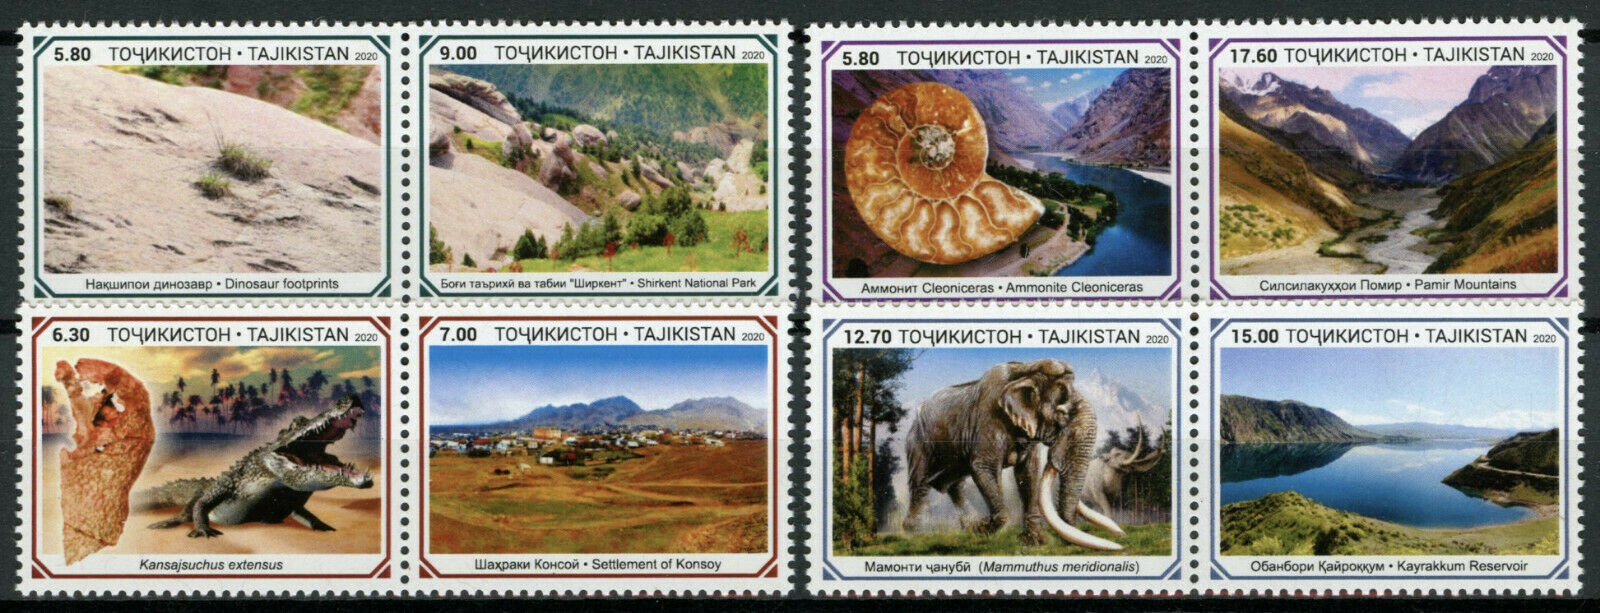 Tajikistan Paleontology Stamps 2020 MNH Dinosaurs Fossils Mammoth 8v Set in Pair